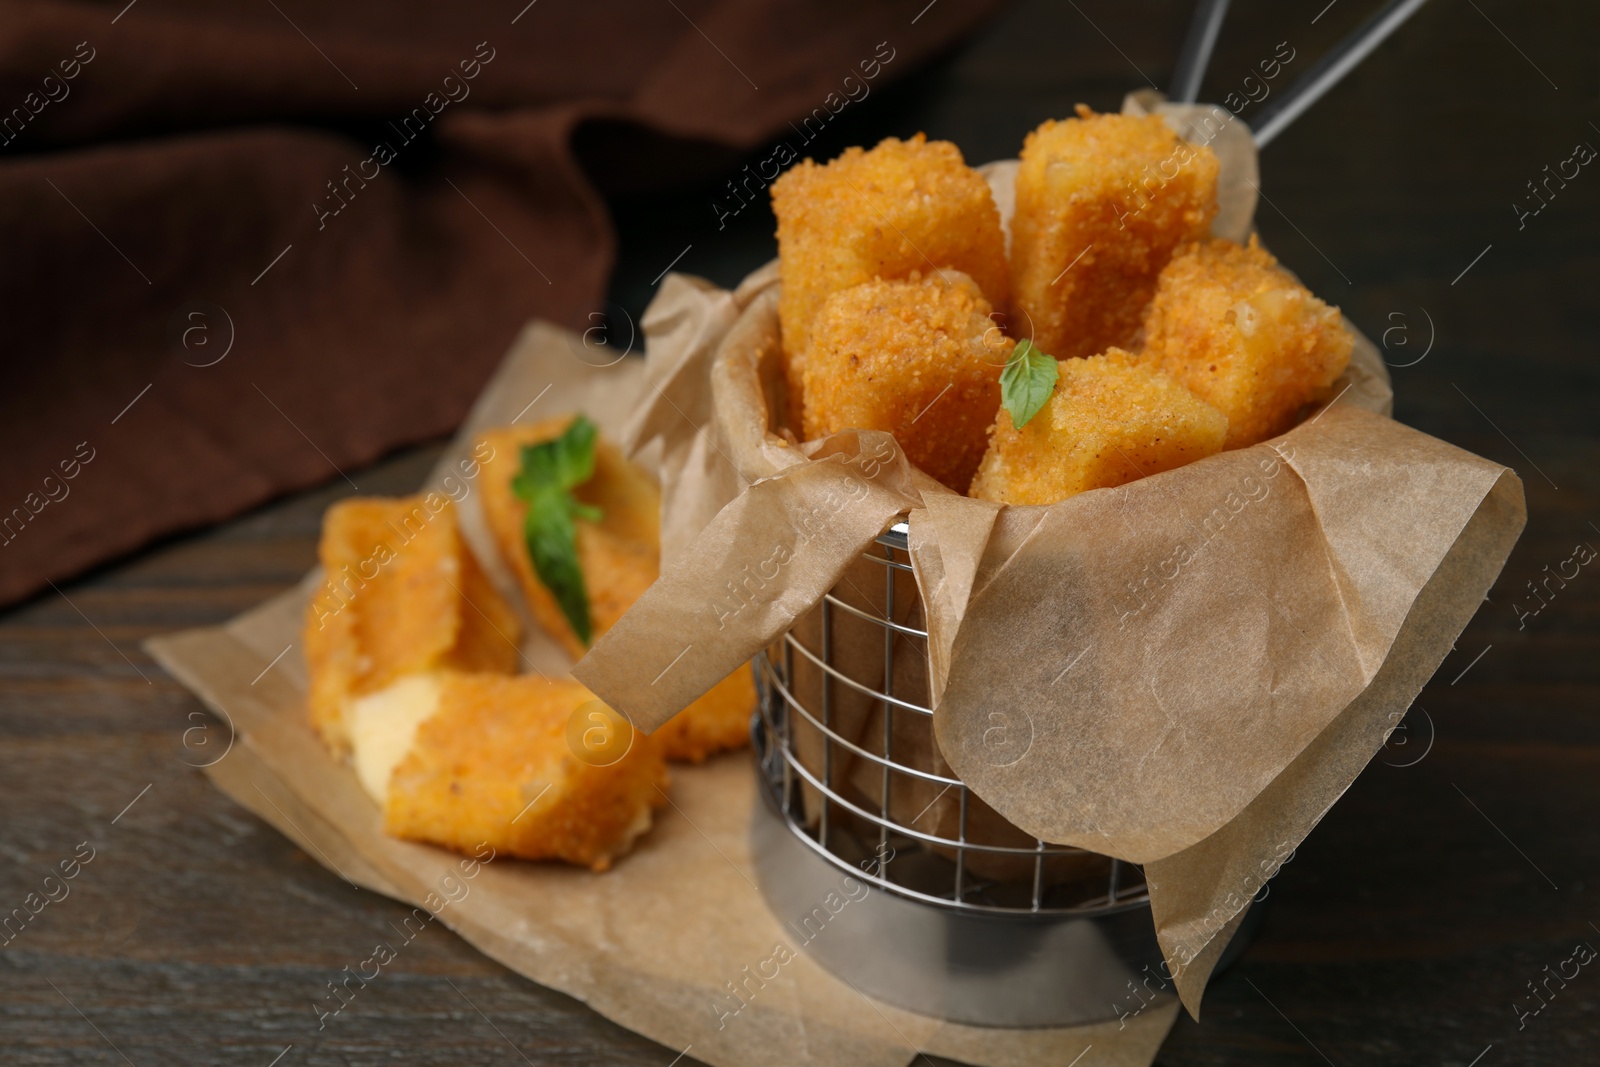 Photo of Metal basket with tasty fried mozzarella sticks on wooden table, closeup